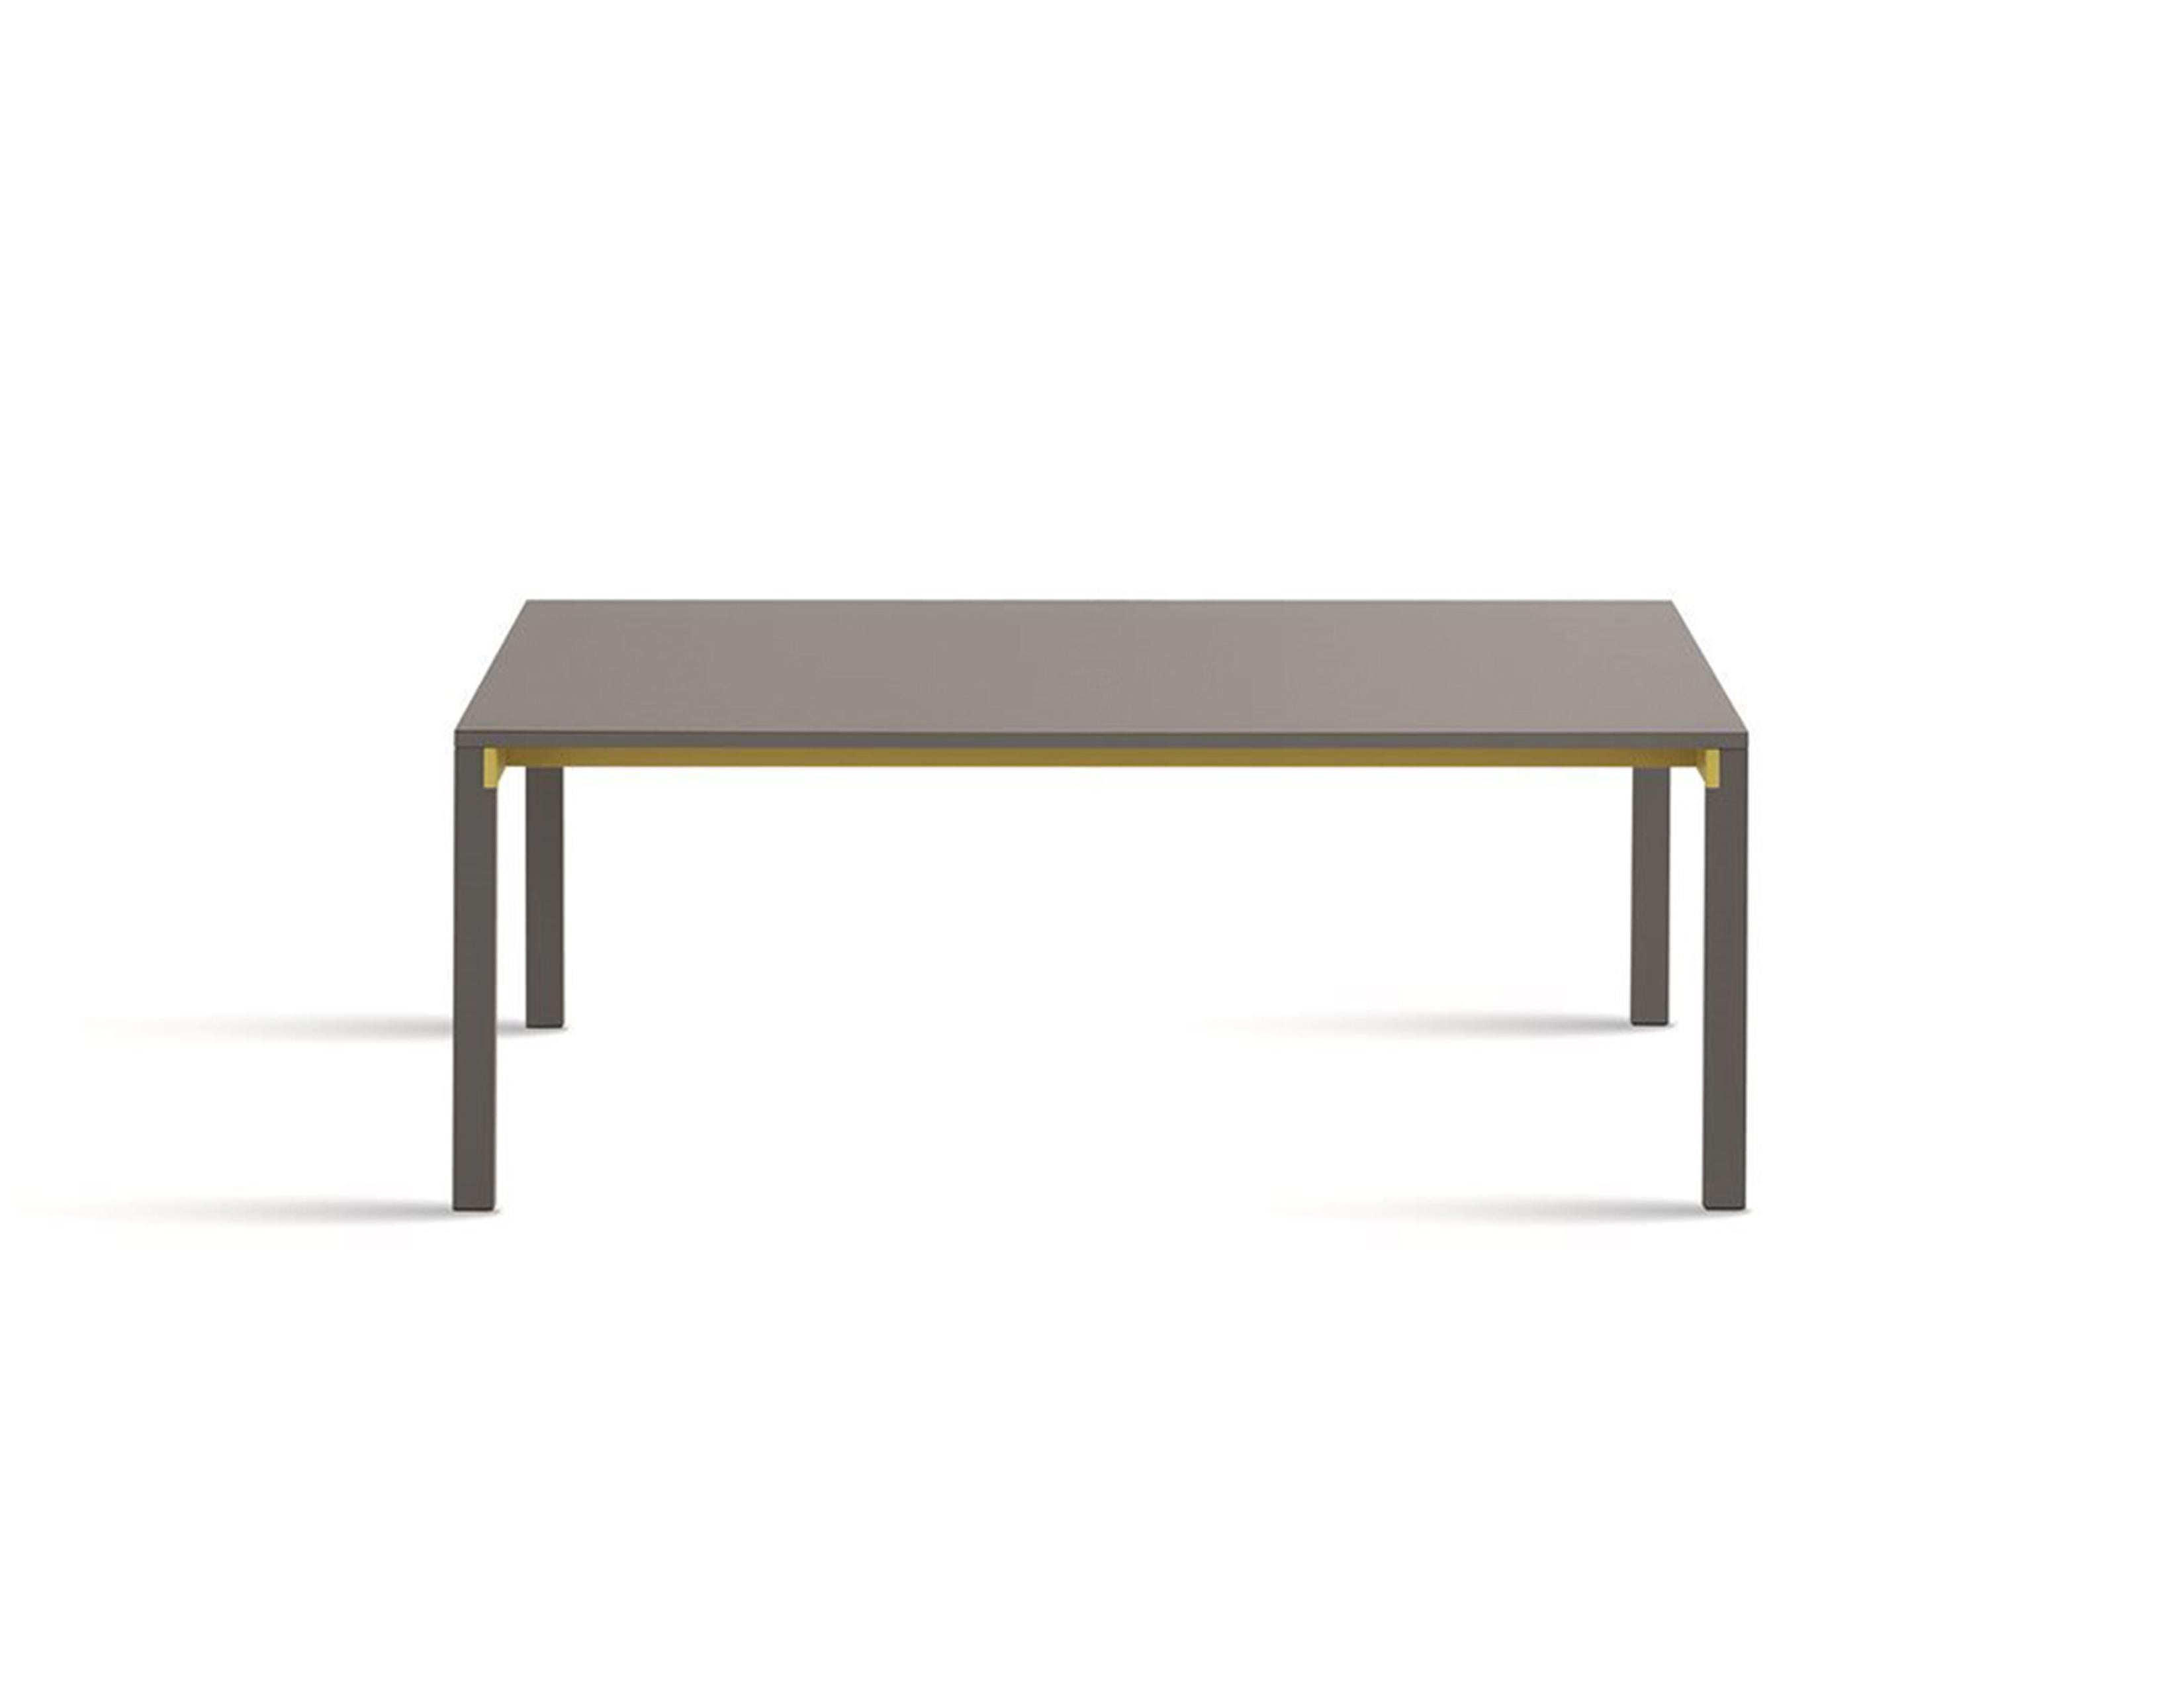 Customizable Desalto Beam Table Designed by Mario Ferrarini 6